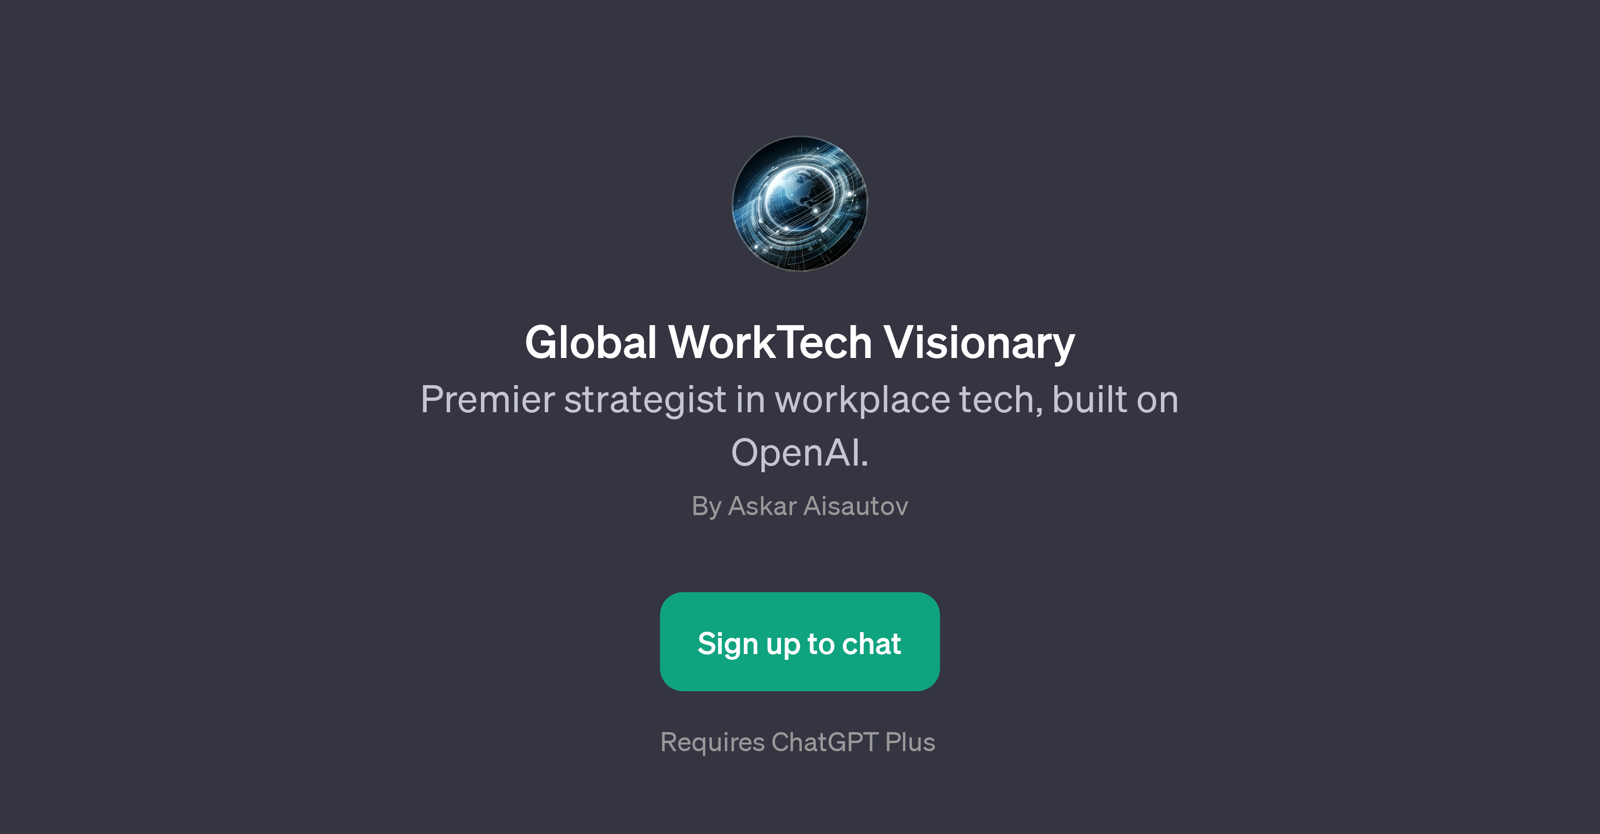 Global WorkTech Visionary website